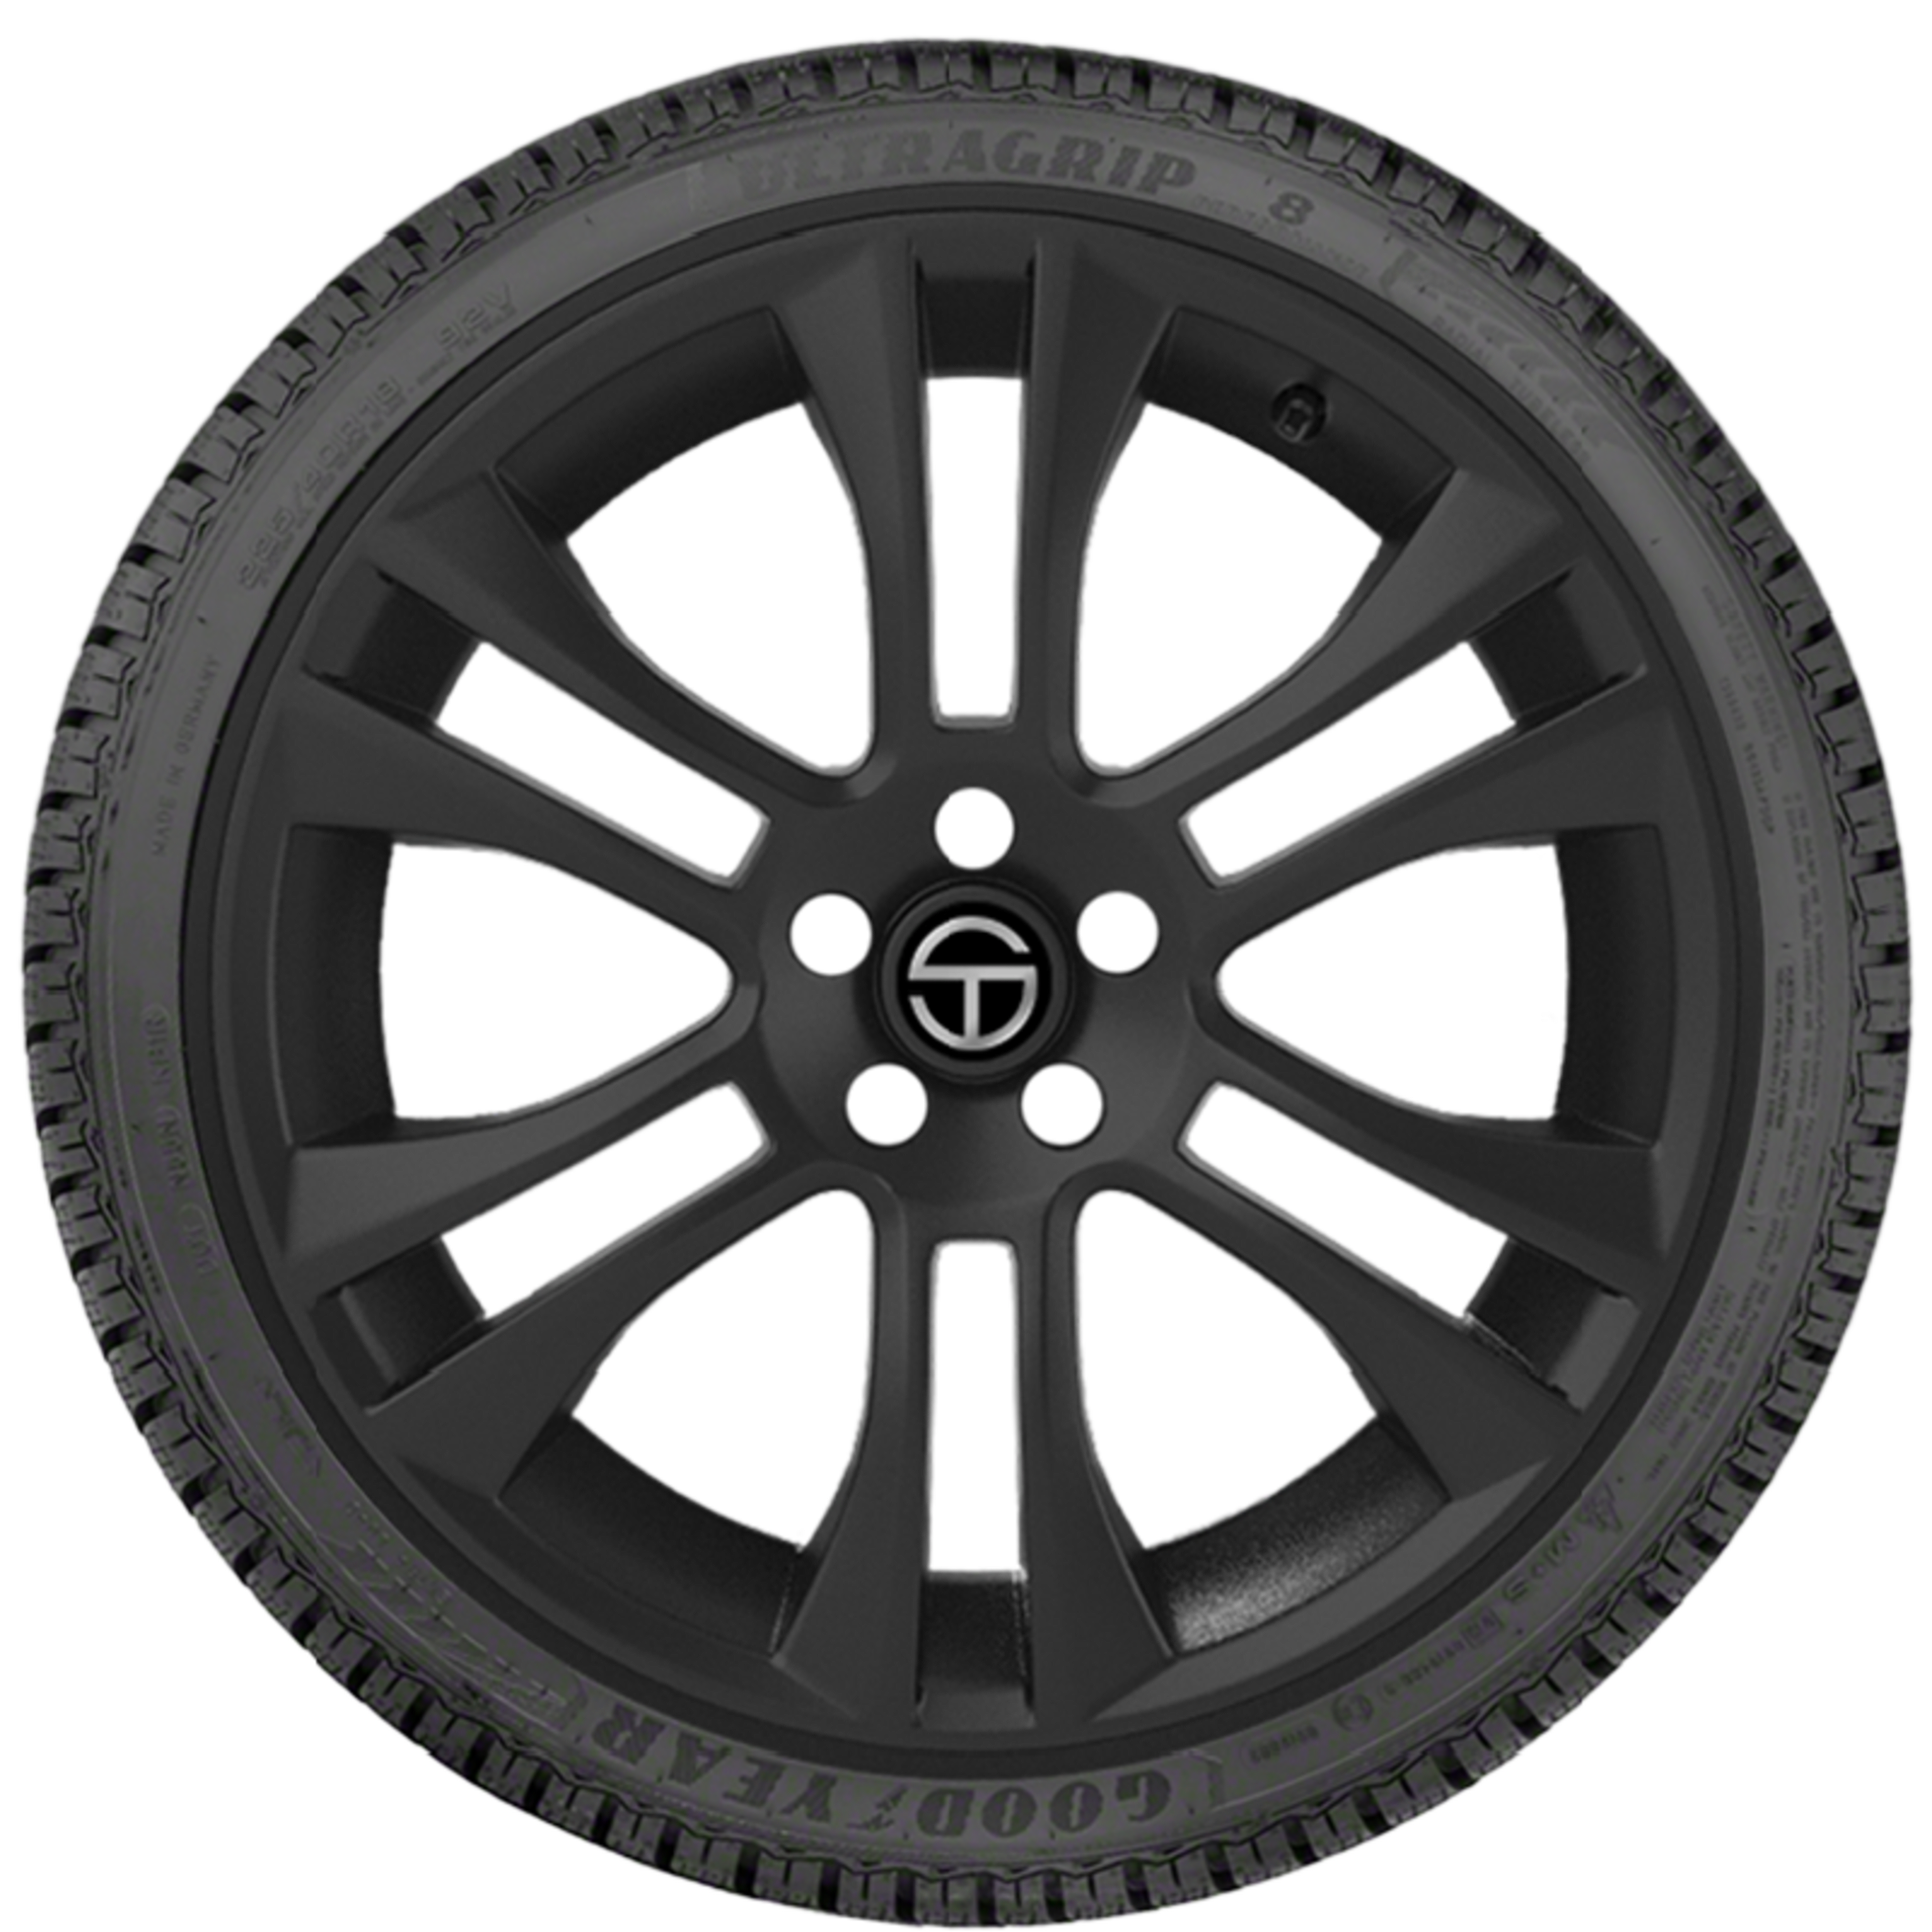 Goodyear 8 Online | SimpleTire Grip Ultra Buy Performance Tires